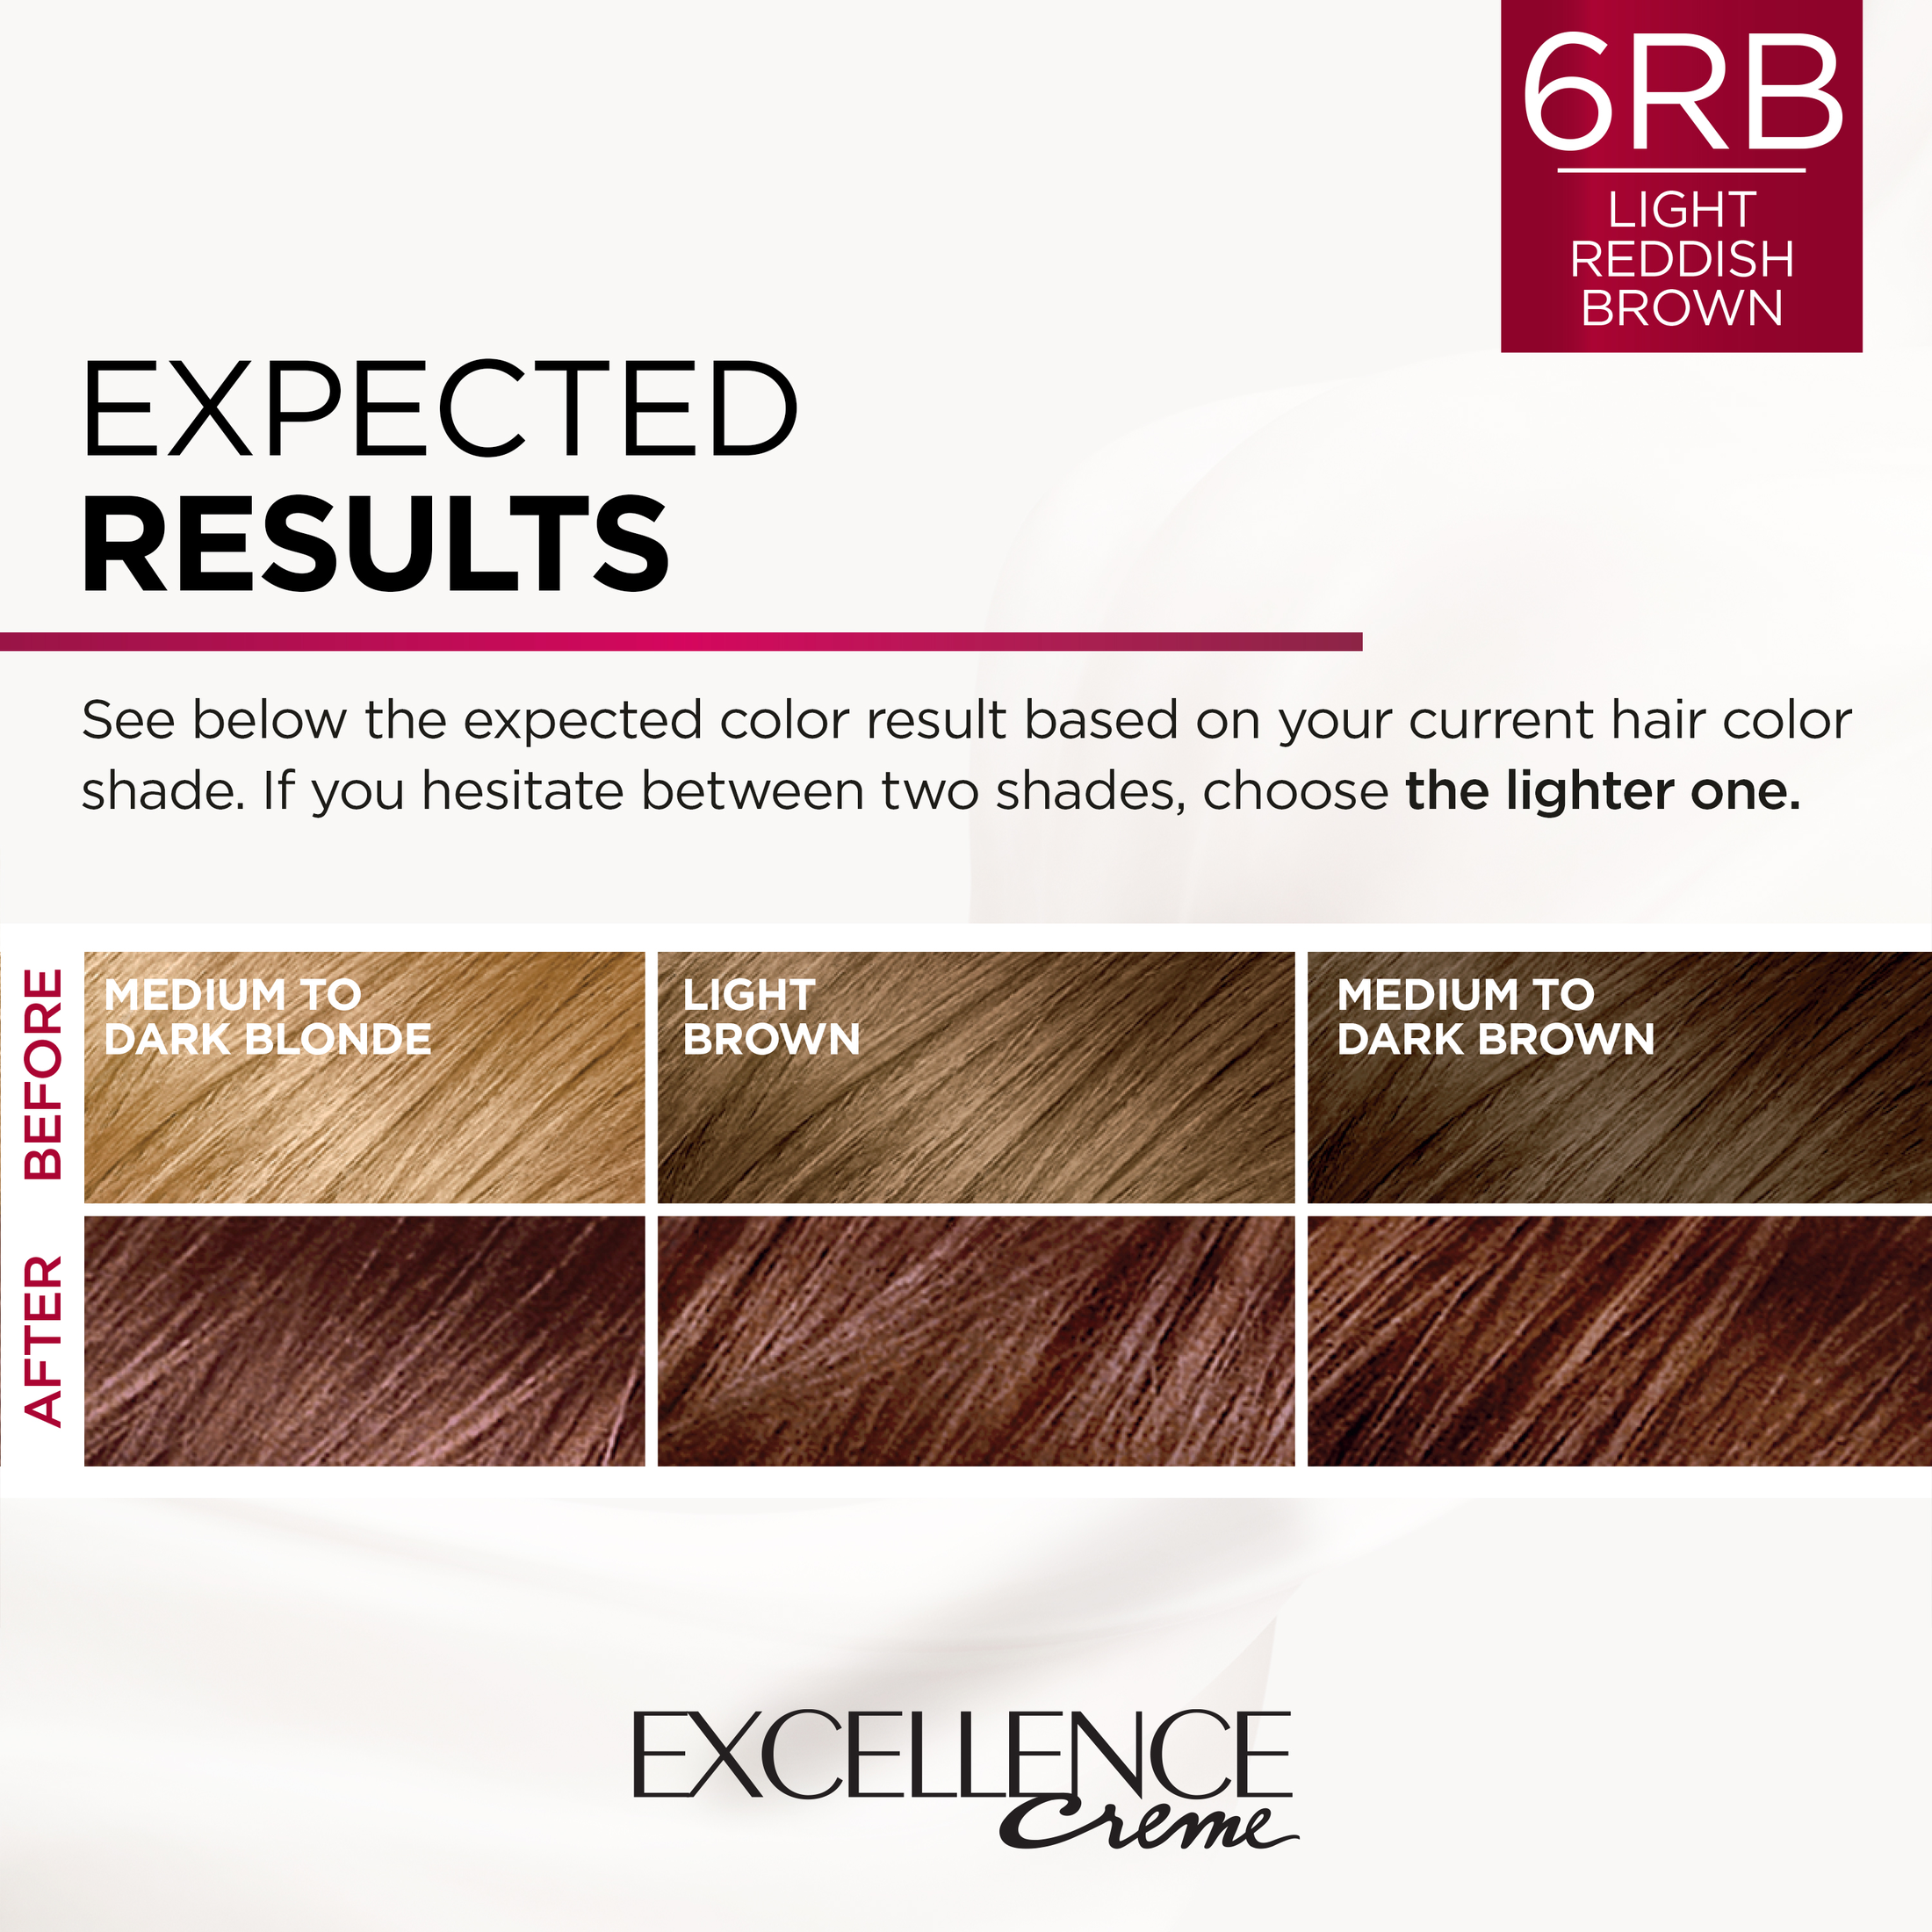 L'Oreal Paris Excellence Creme Permanent Hair Color, 6RB Light Reddish Brown - image 5 of 8